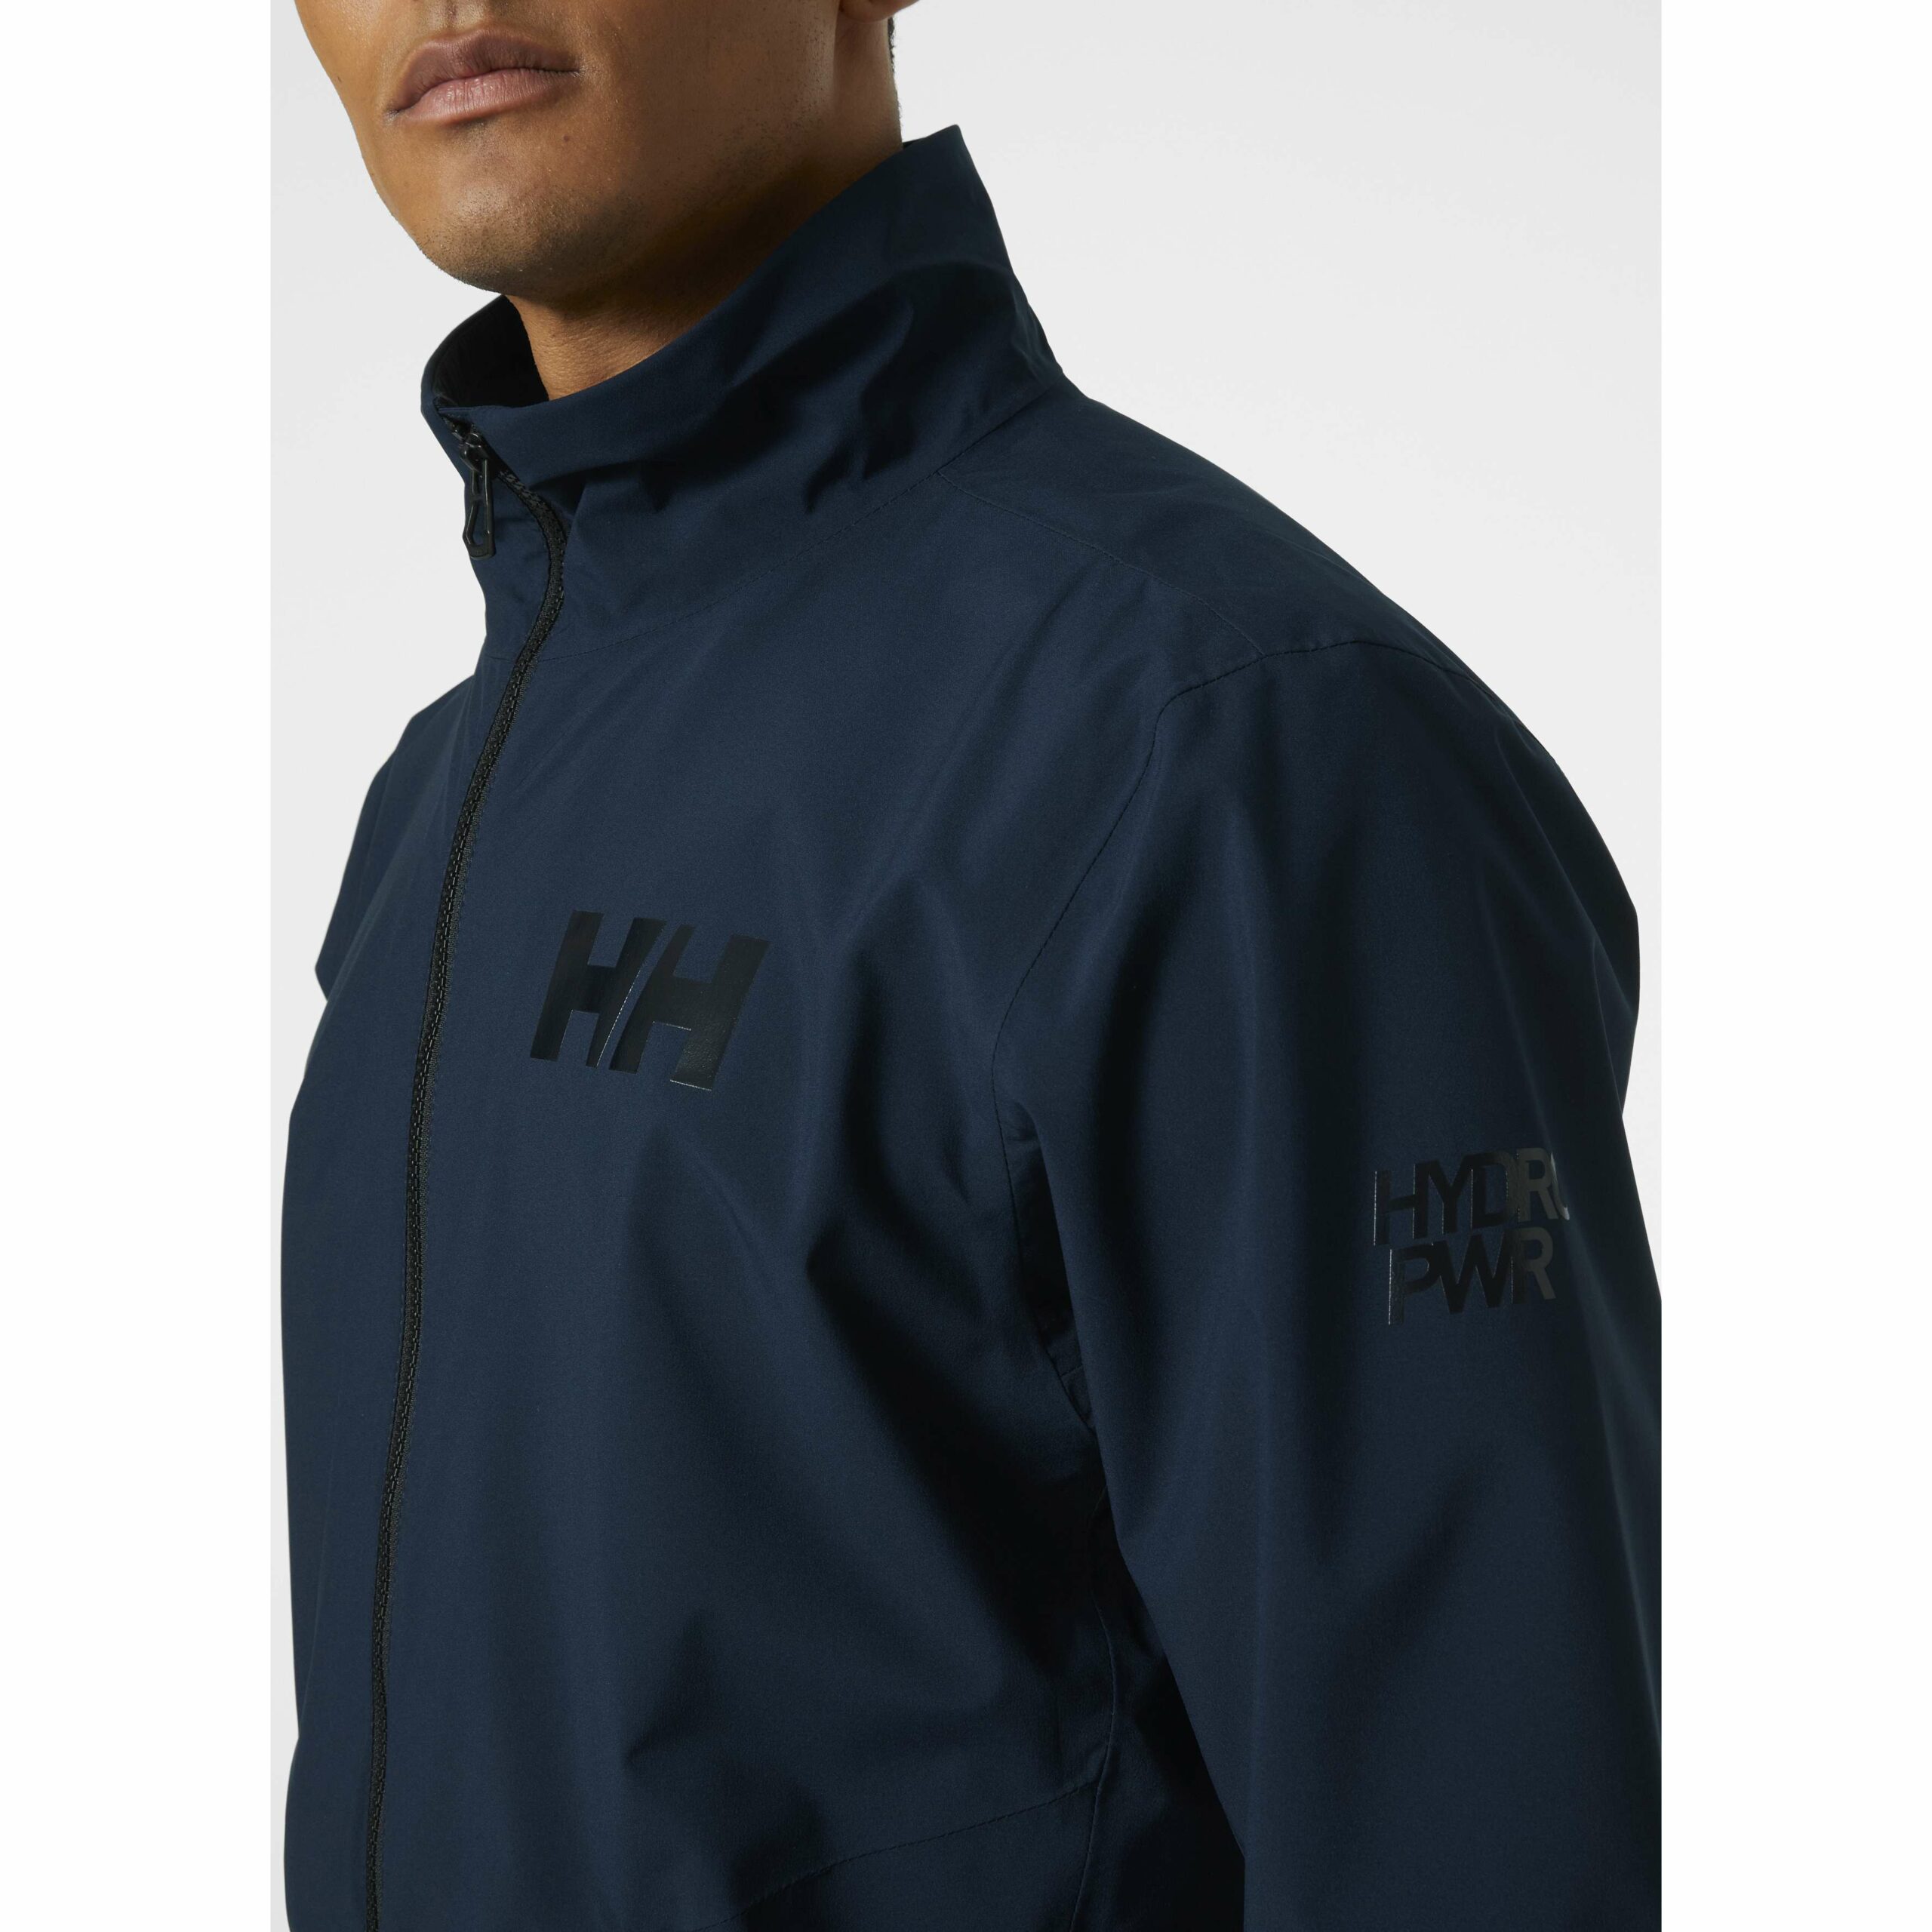 Helly Hansen HP RACING - Veste Homme navy - Private Sport Shop